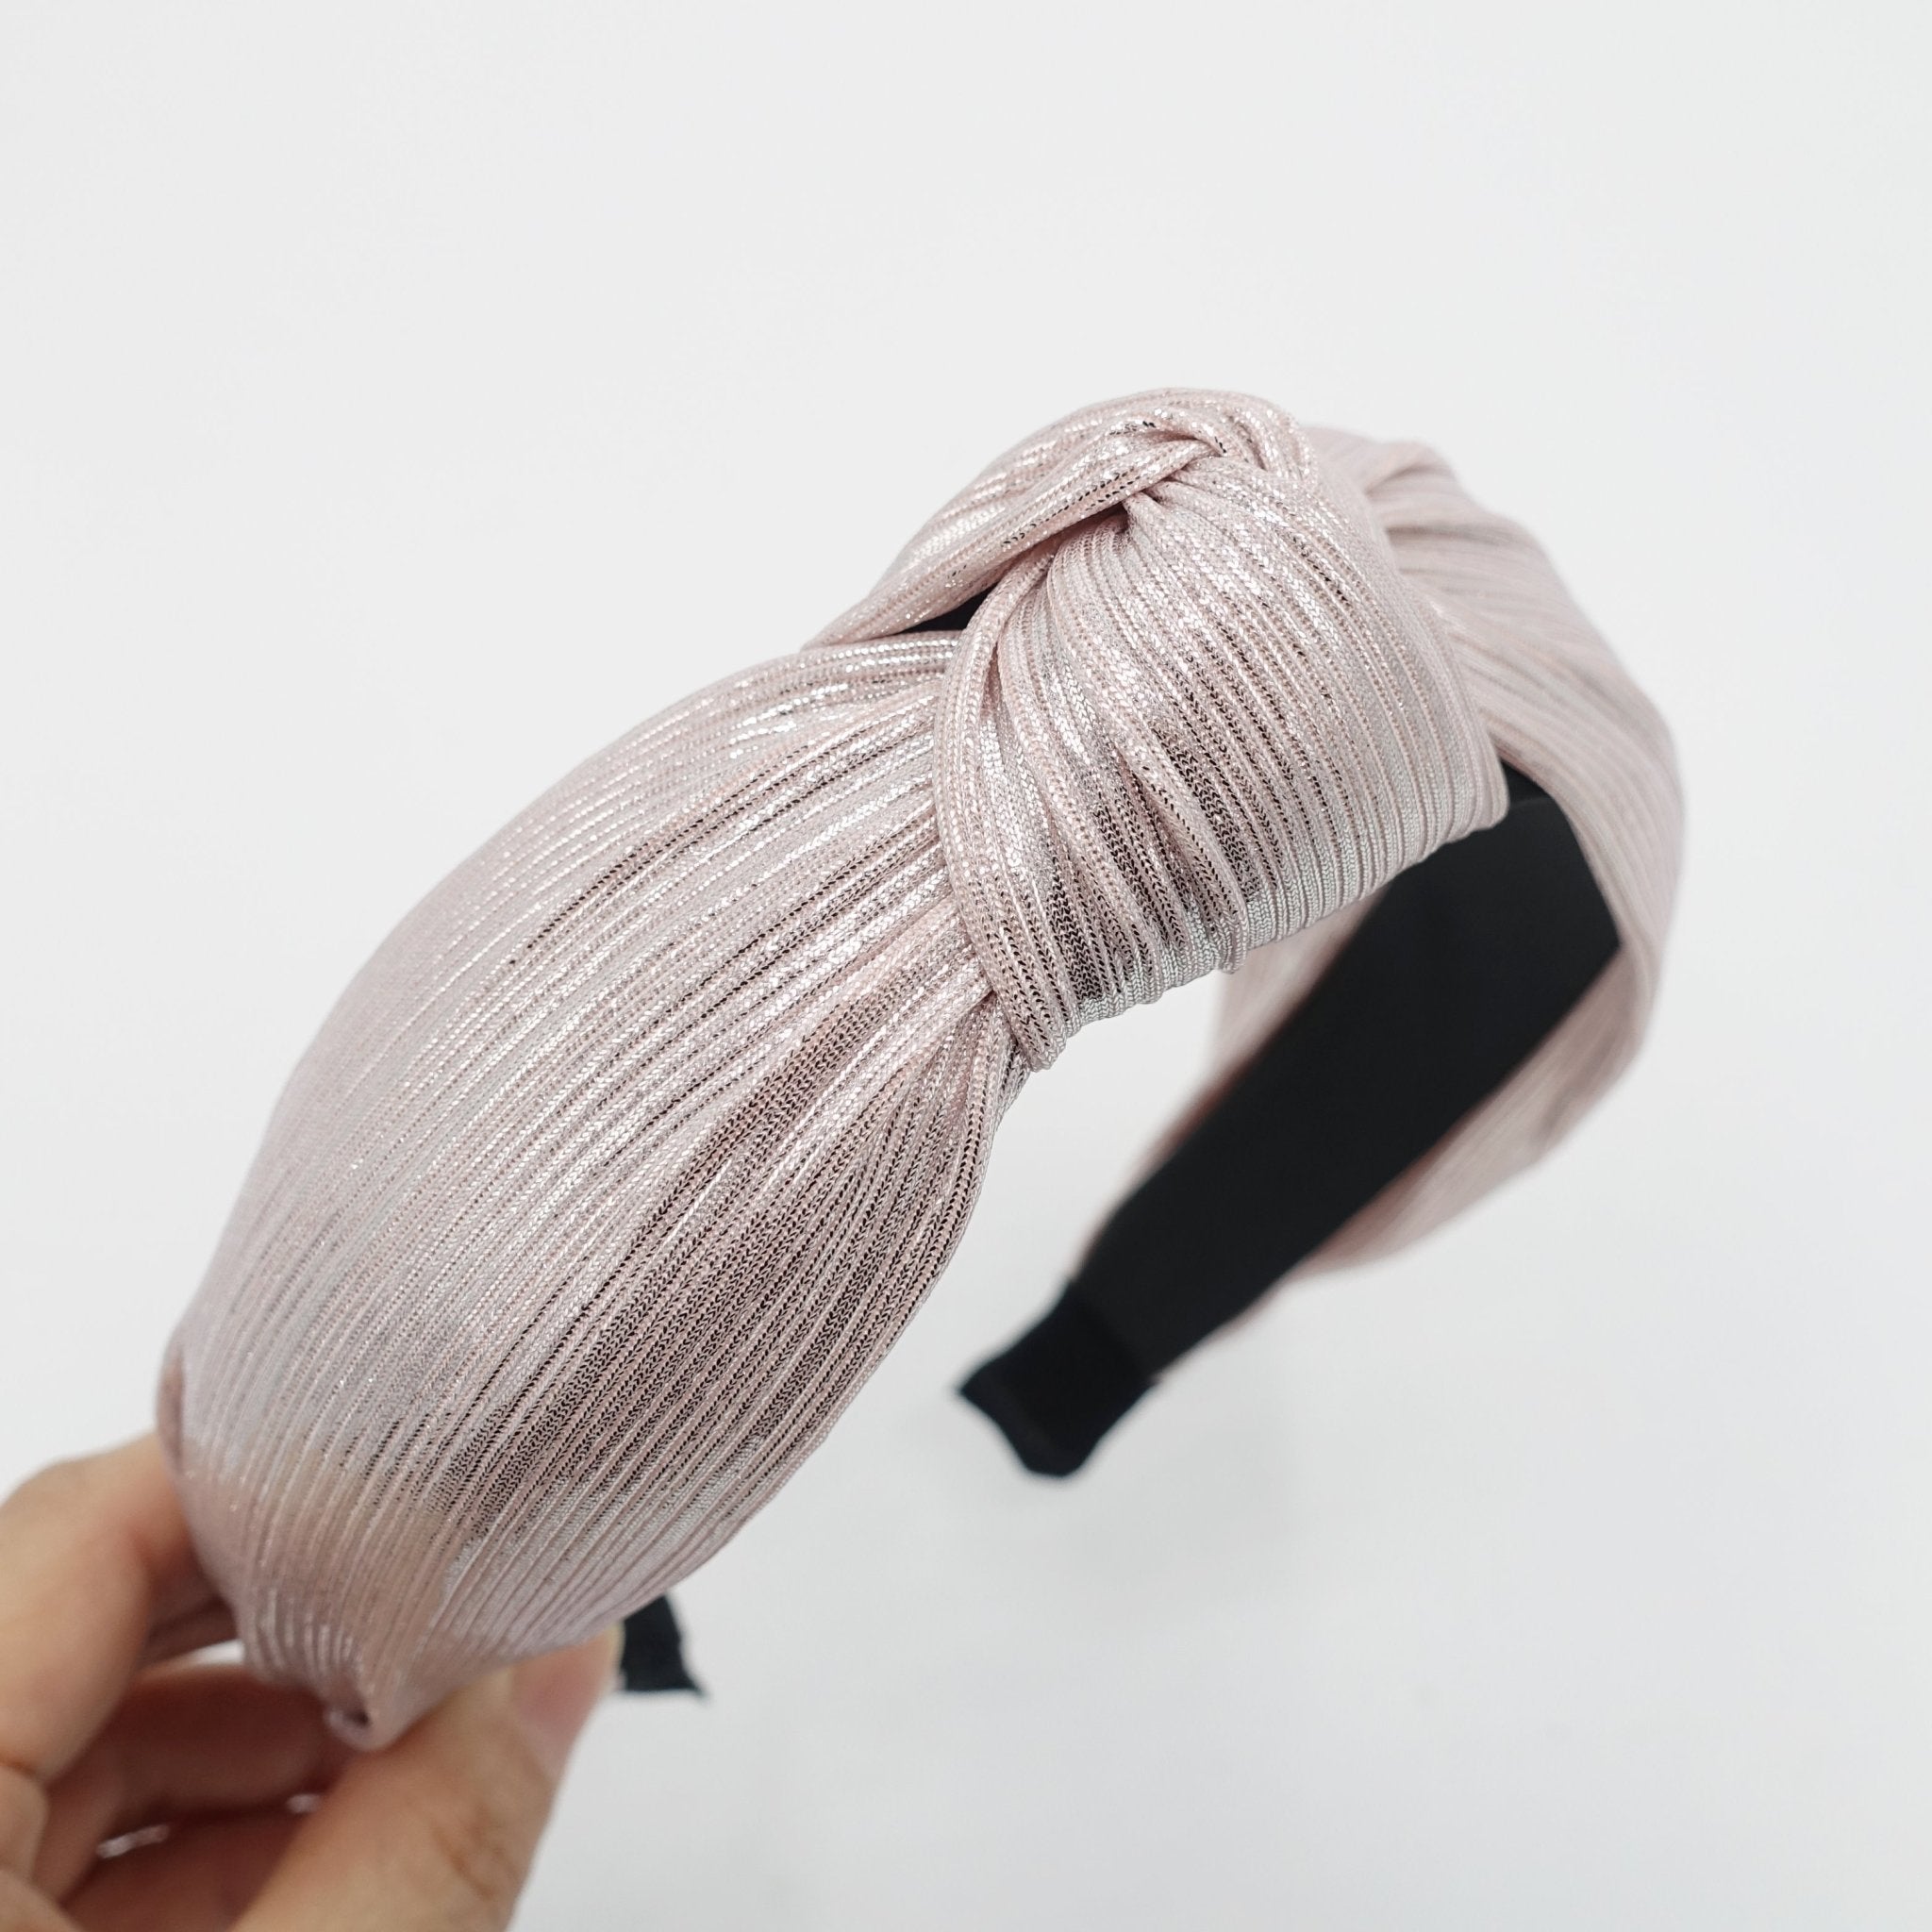 veryshine.com hairband/headband Indi pink super glossy fabric knotted headband shiny knotted hairband women hair accessory